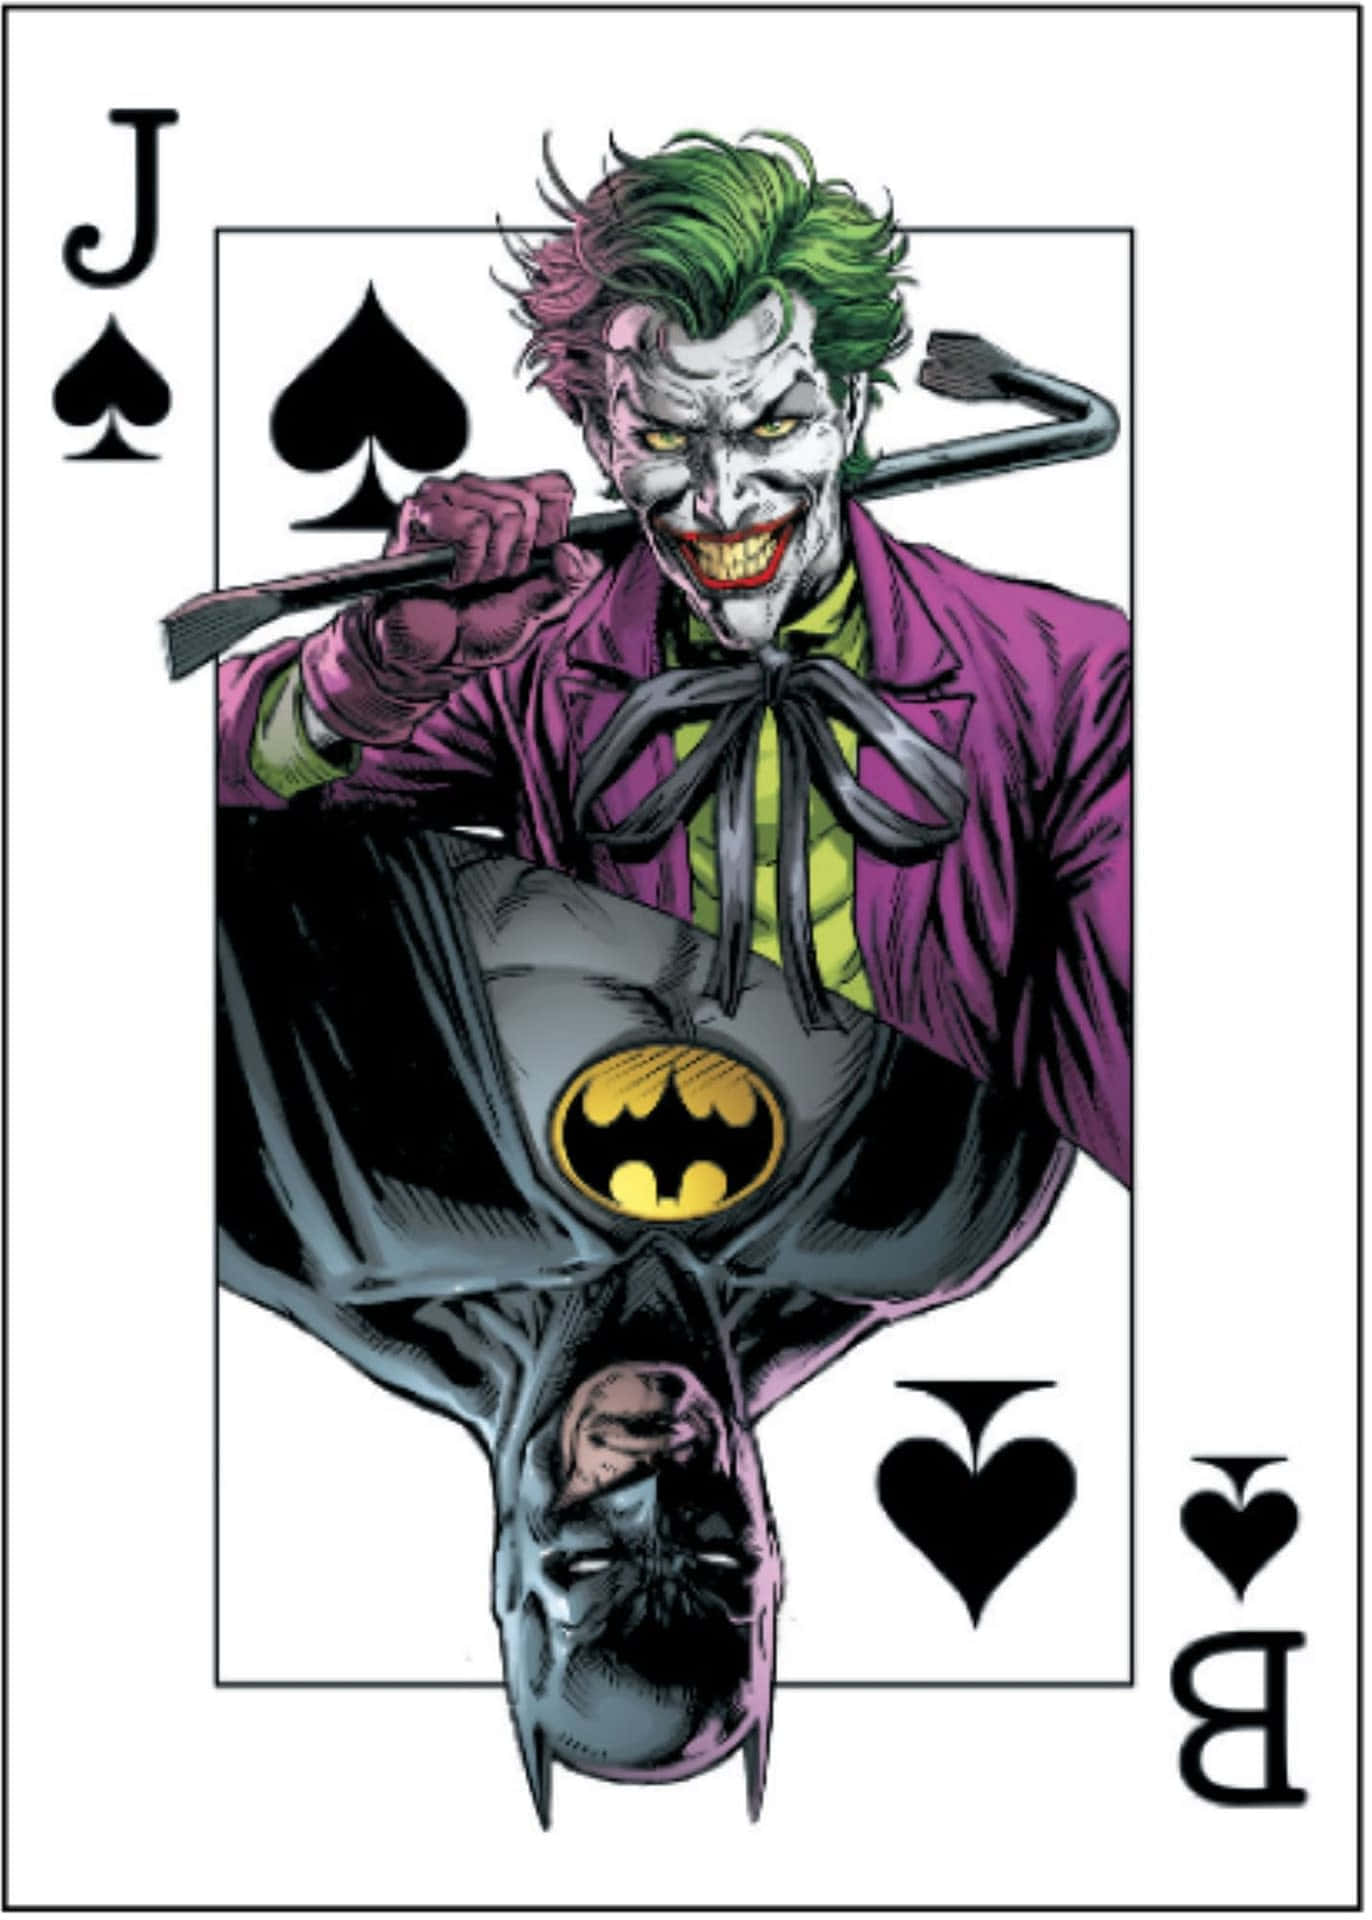 The Joker, a master of chaos